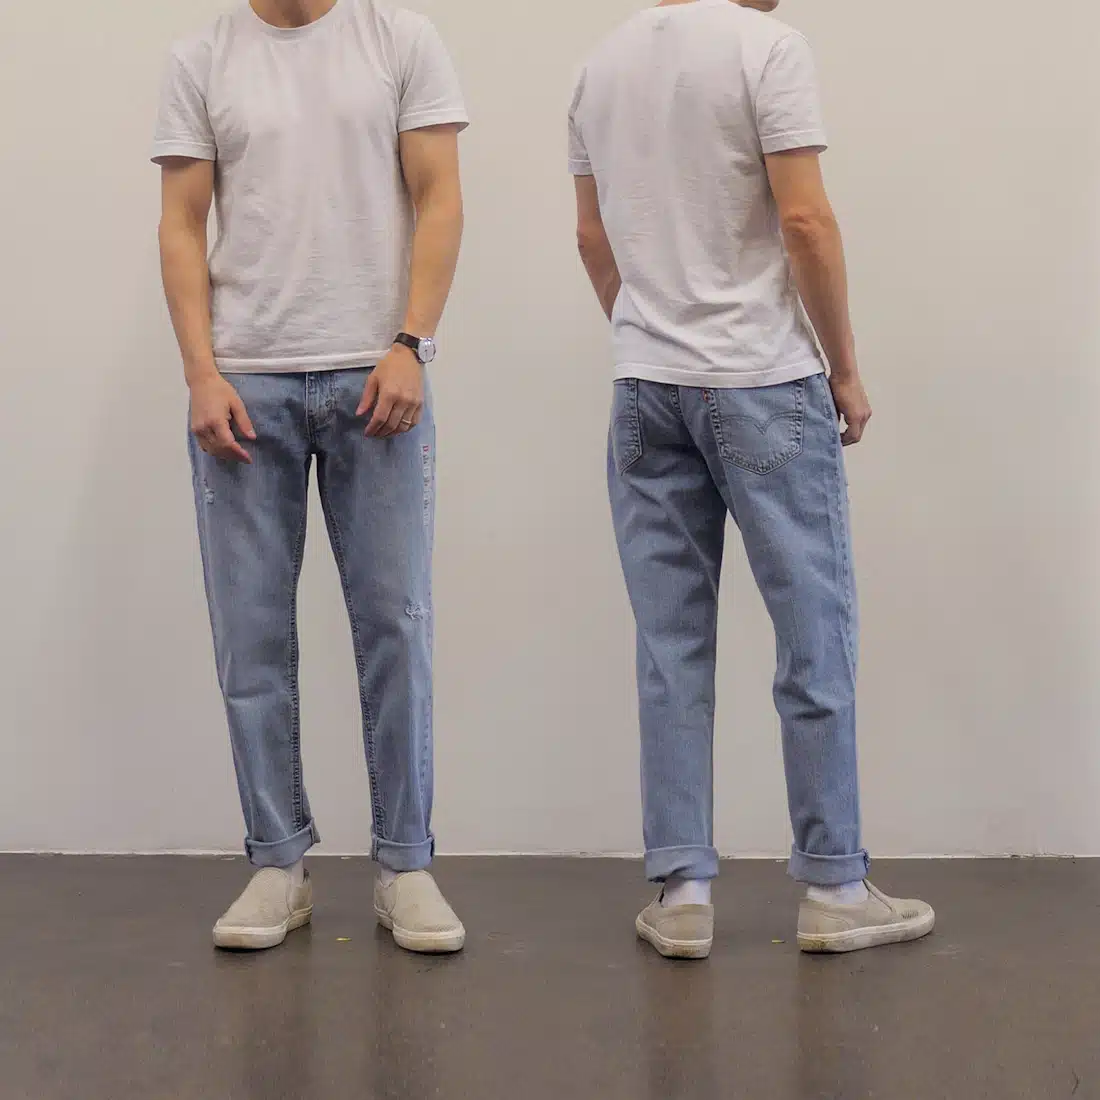 Levi's Fits Explained: Comparison of Jeans Fits - The Modest Man